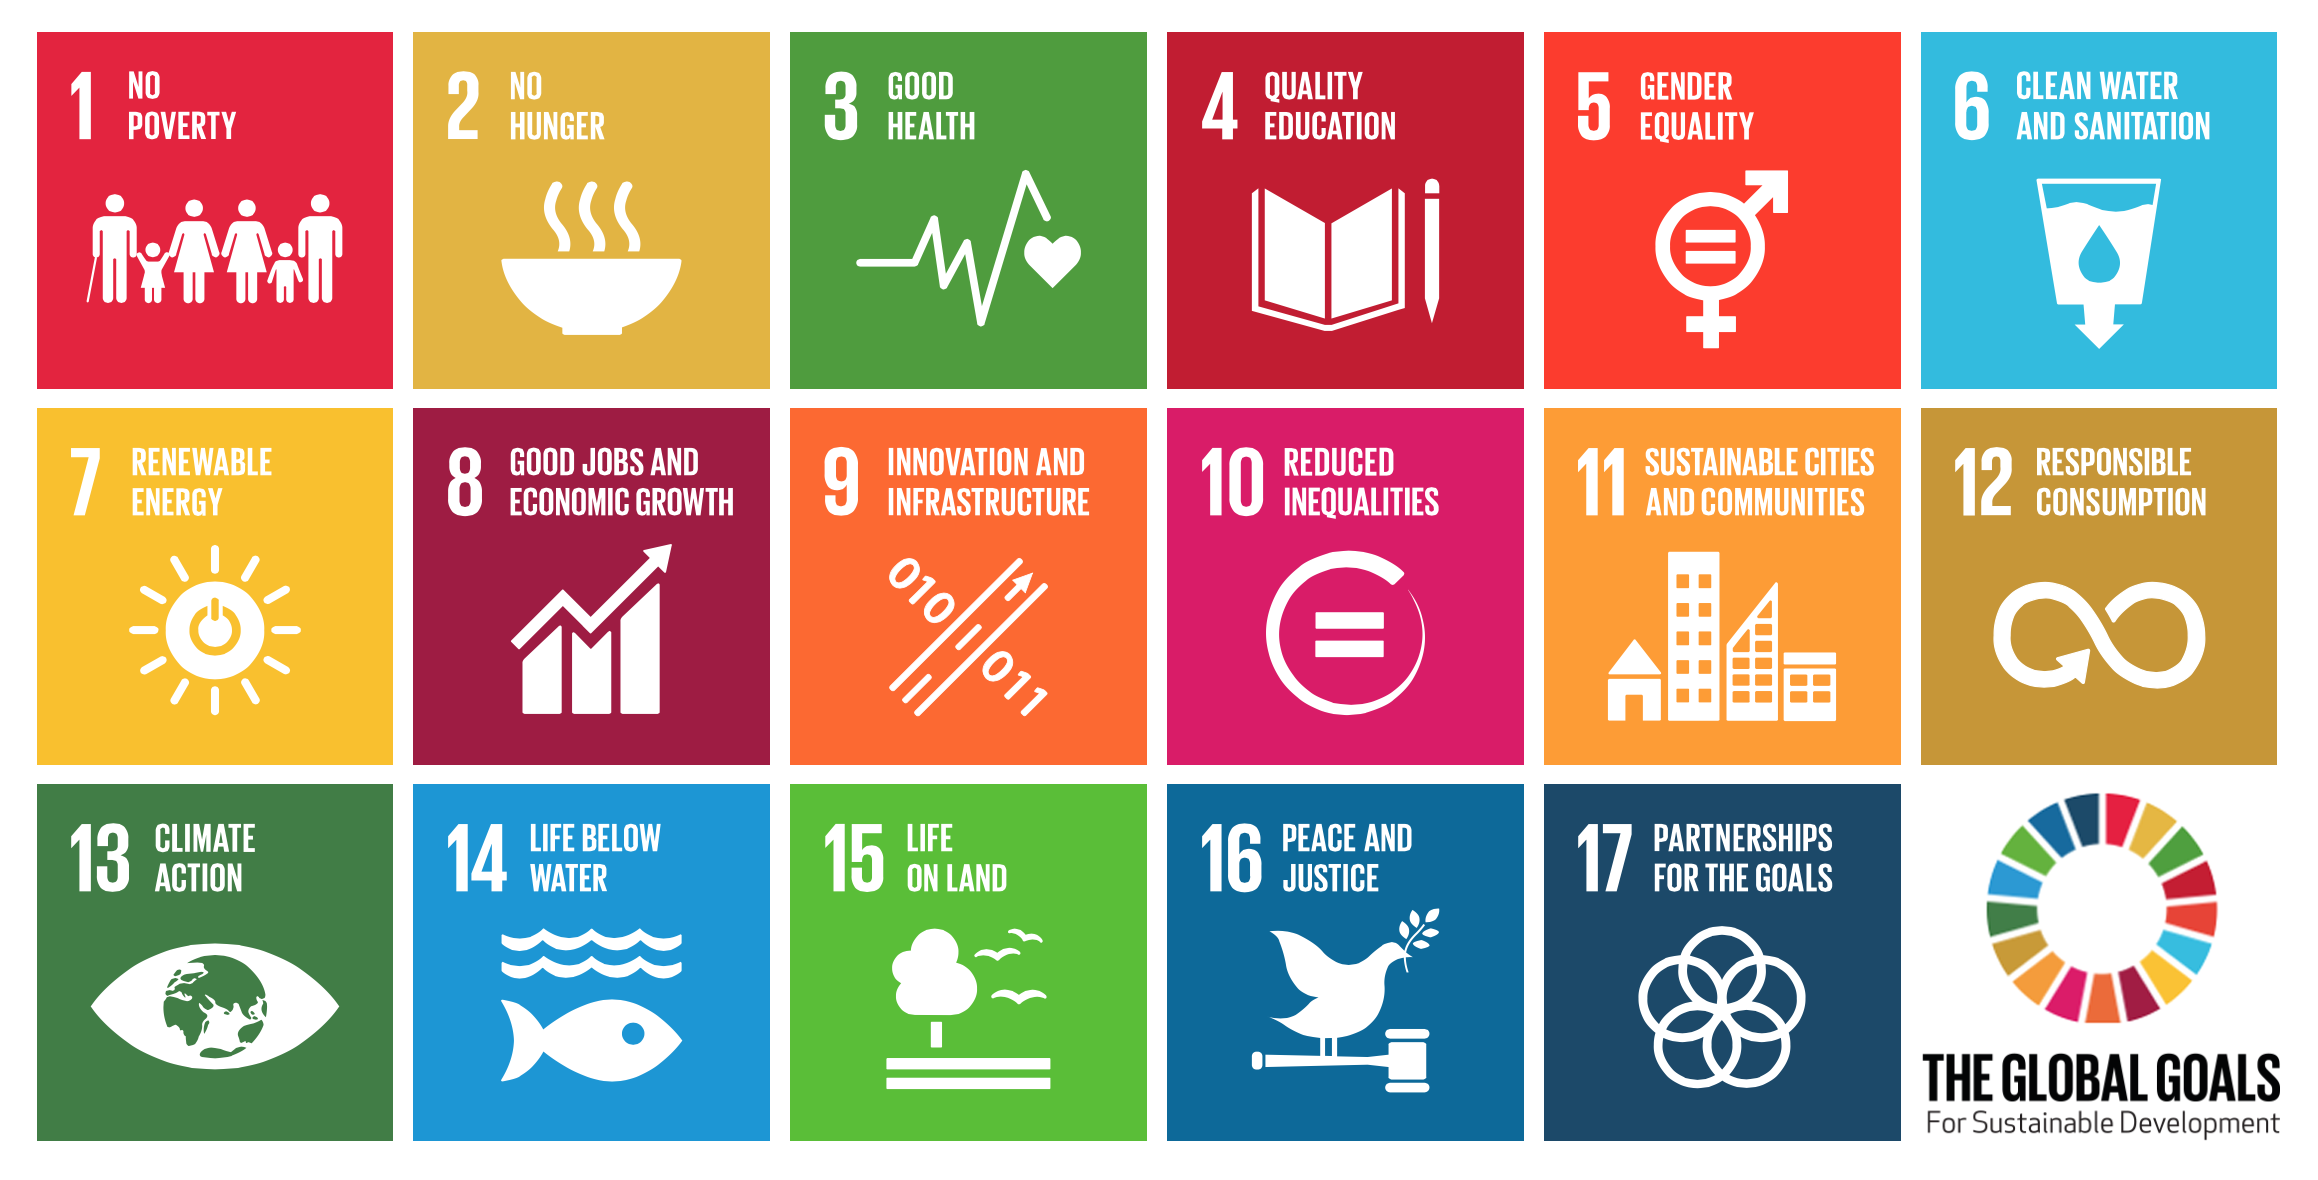 UN Sustainable Development
				goals